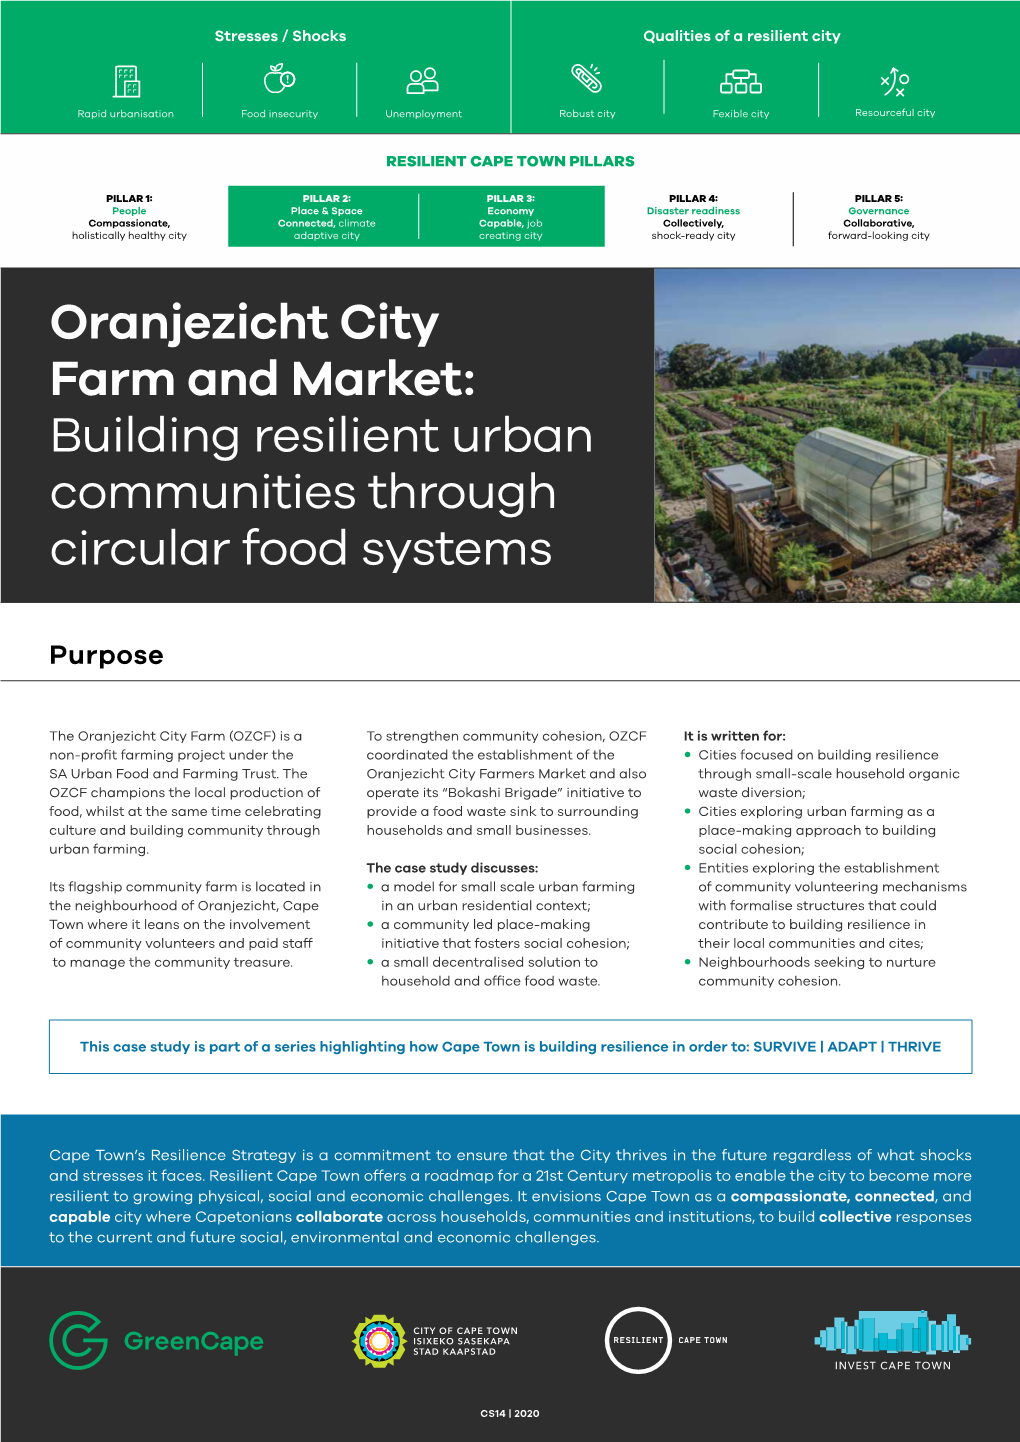 Oranjezicht City Farm and Market: Building Resilient Urban Communities Through Circular Food Systems